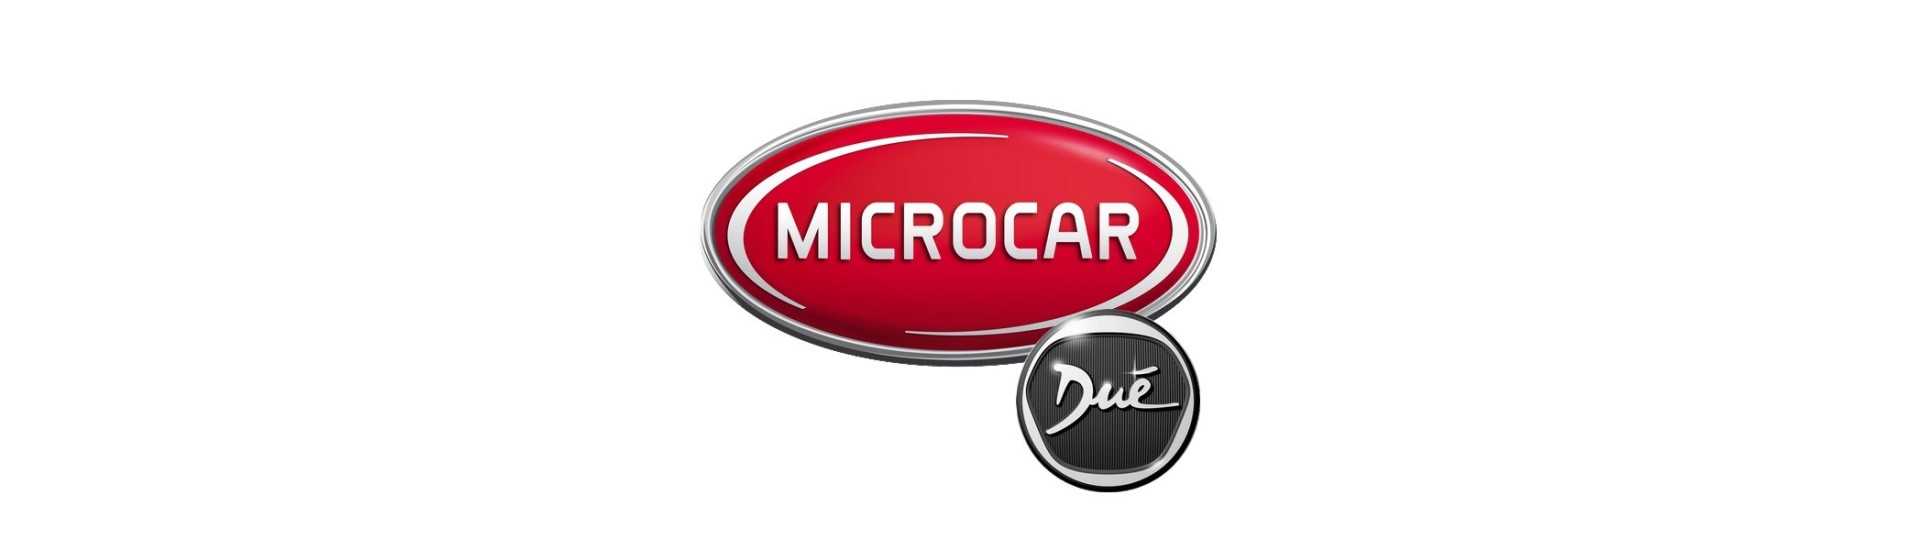 Plattenbeleuchtung zum besten Preis Auto ohne Lizenz Microcar Dué